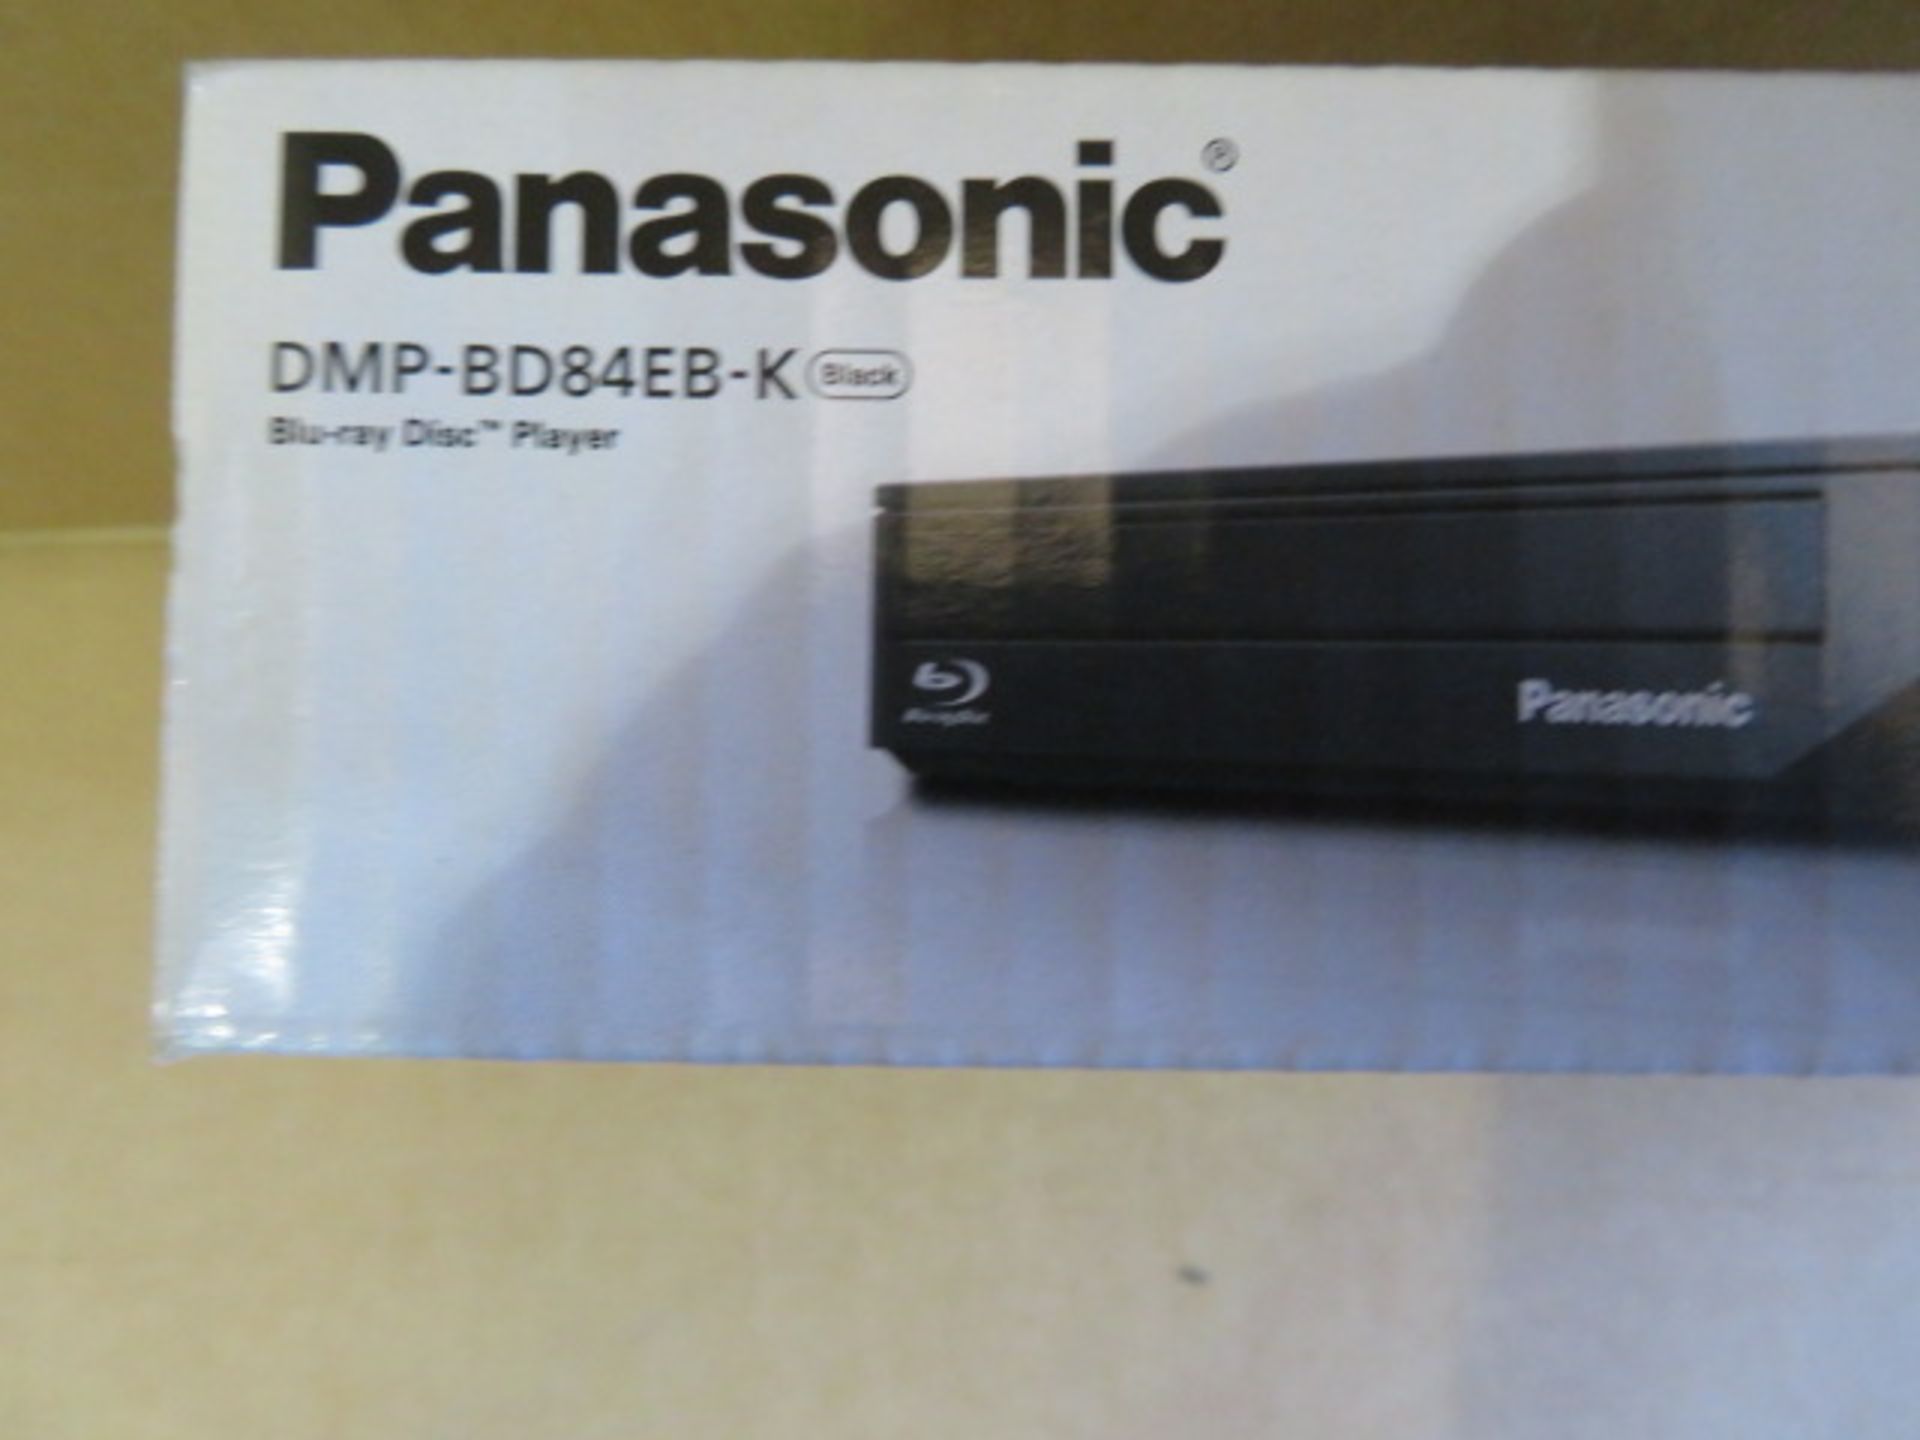 (34) 1 x Grade B - Panasonic DMP-BD84EB-K Smart Network 2D Blu-ray Disc/DVD Player - Black. Wit... - Image 2 of 2